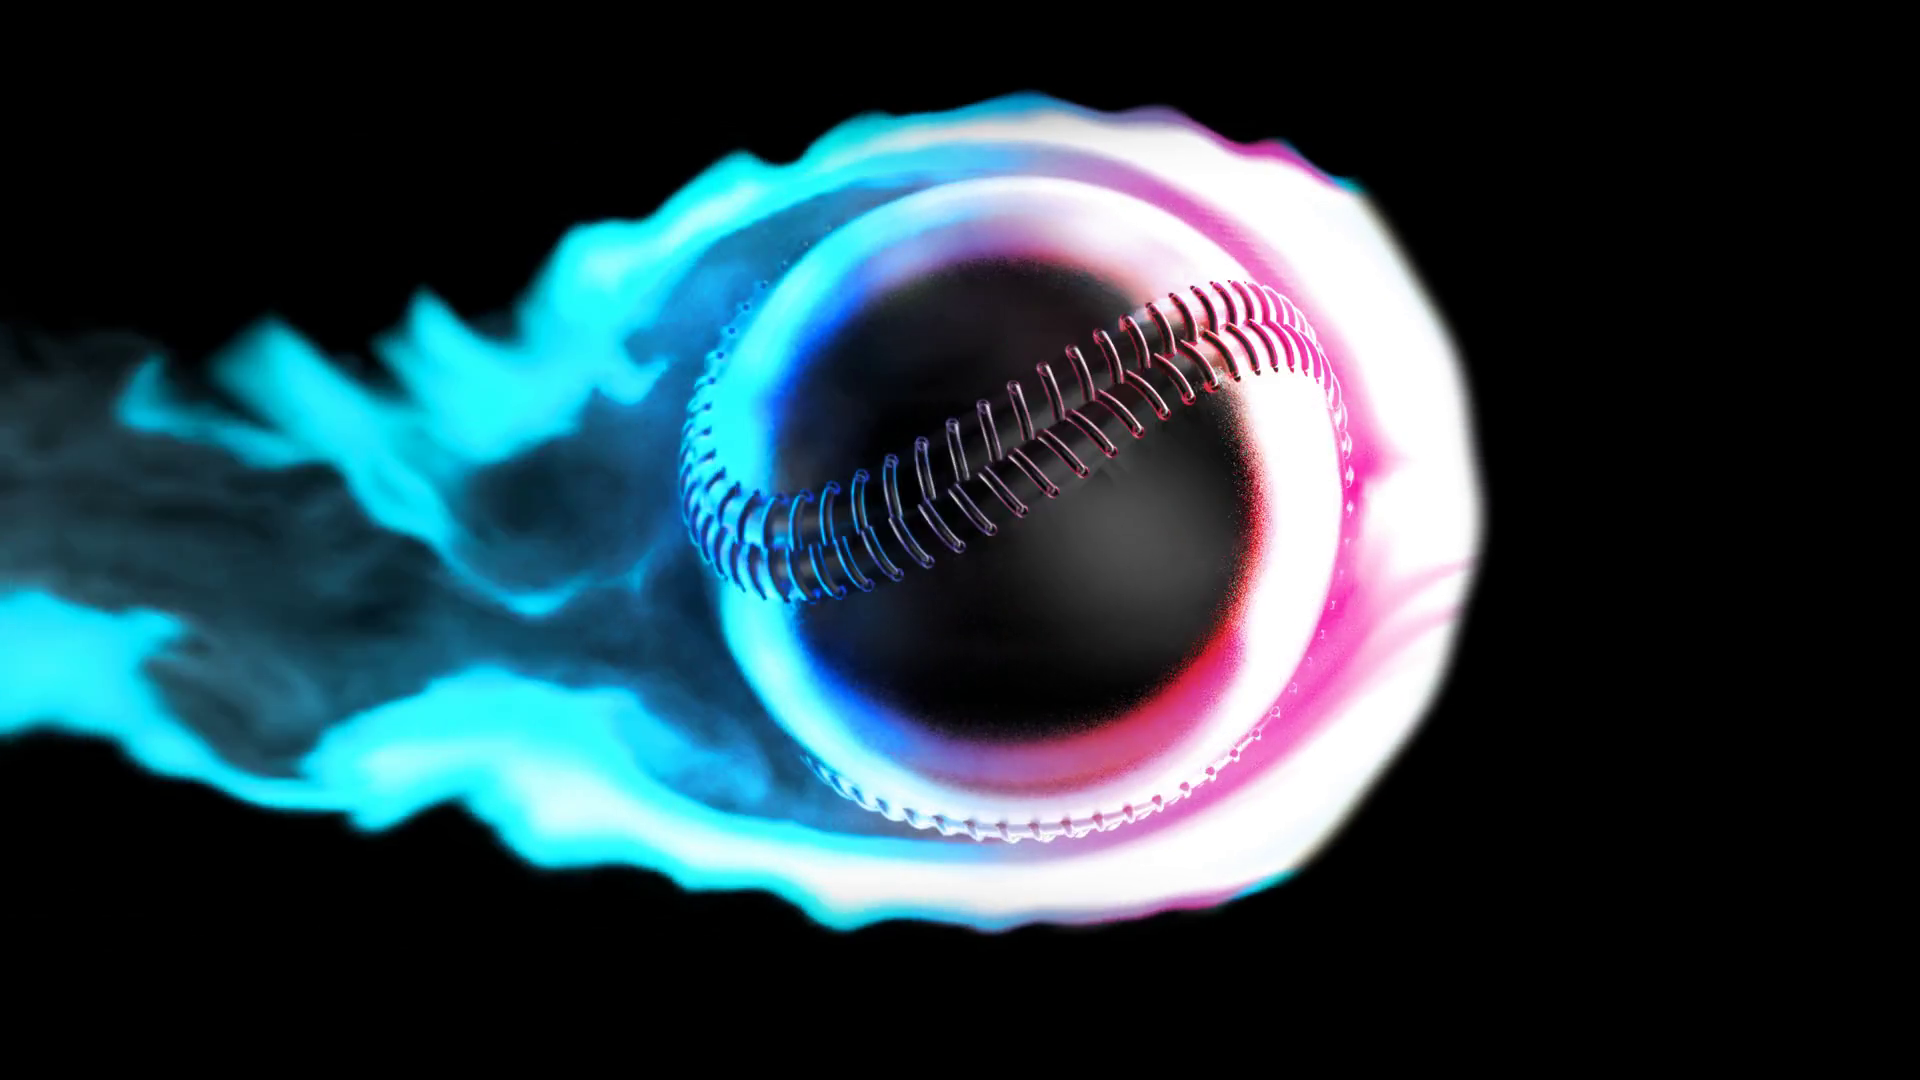 Flying Baseball On Fire On A Black Background Motion Background 00:10 SBV 337762869